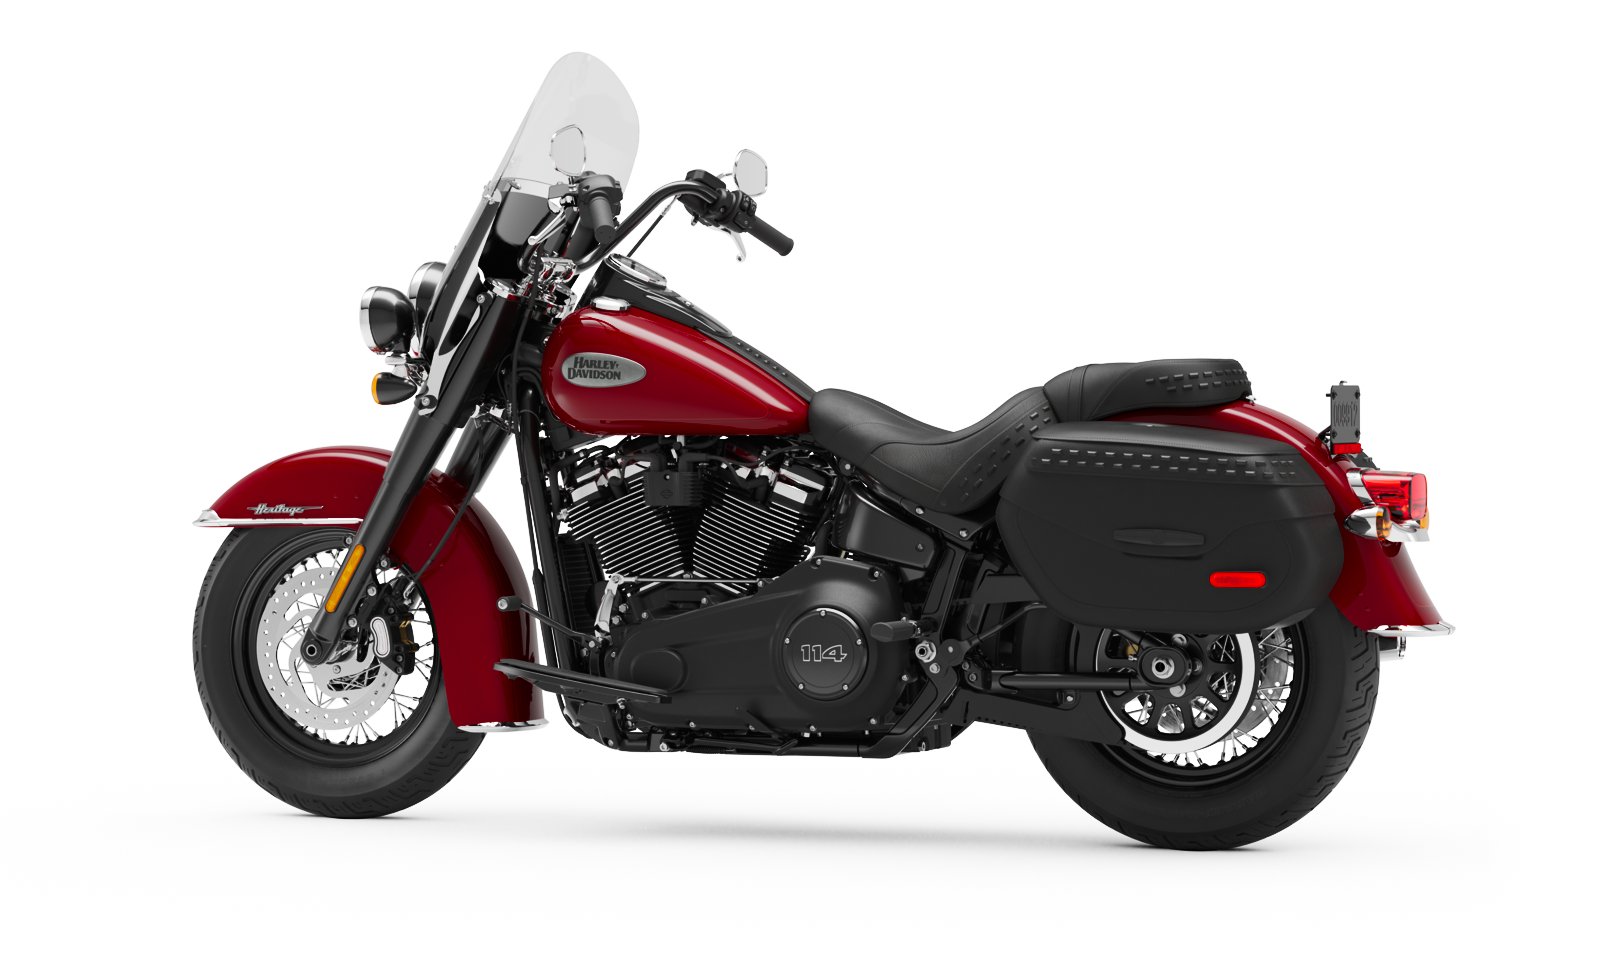 New 2021 Harley Davidson Heritage Classic Billiard Teal Motorcycles In Sauk Rapids Mn 052317